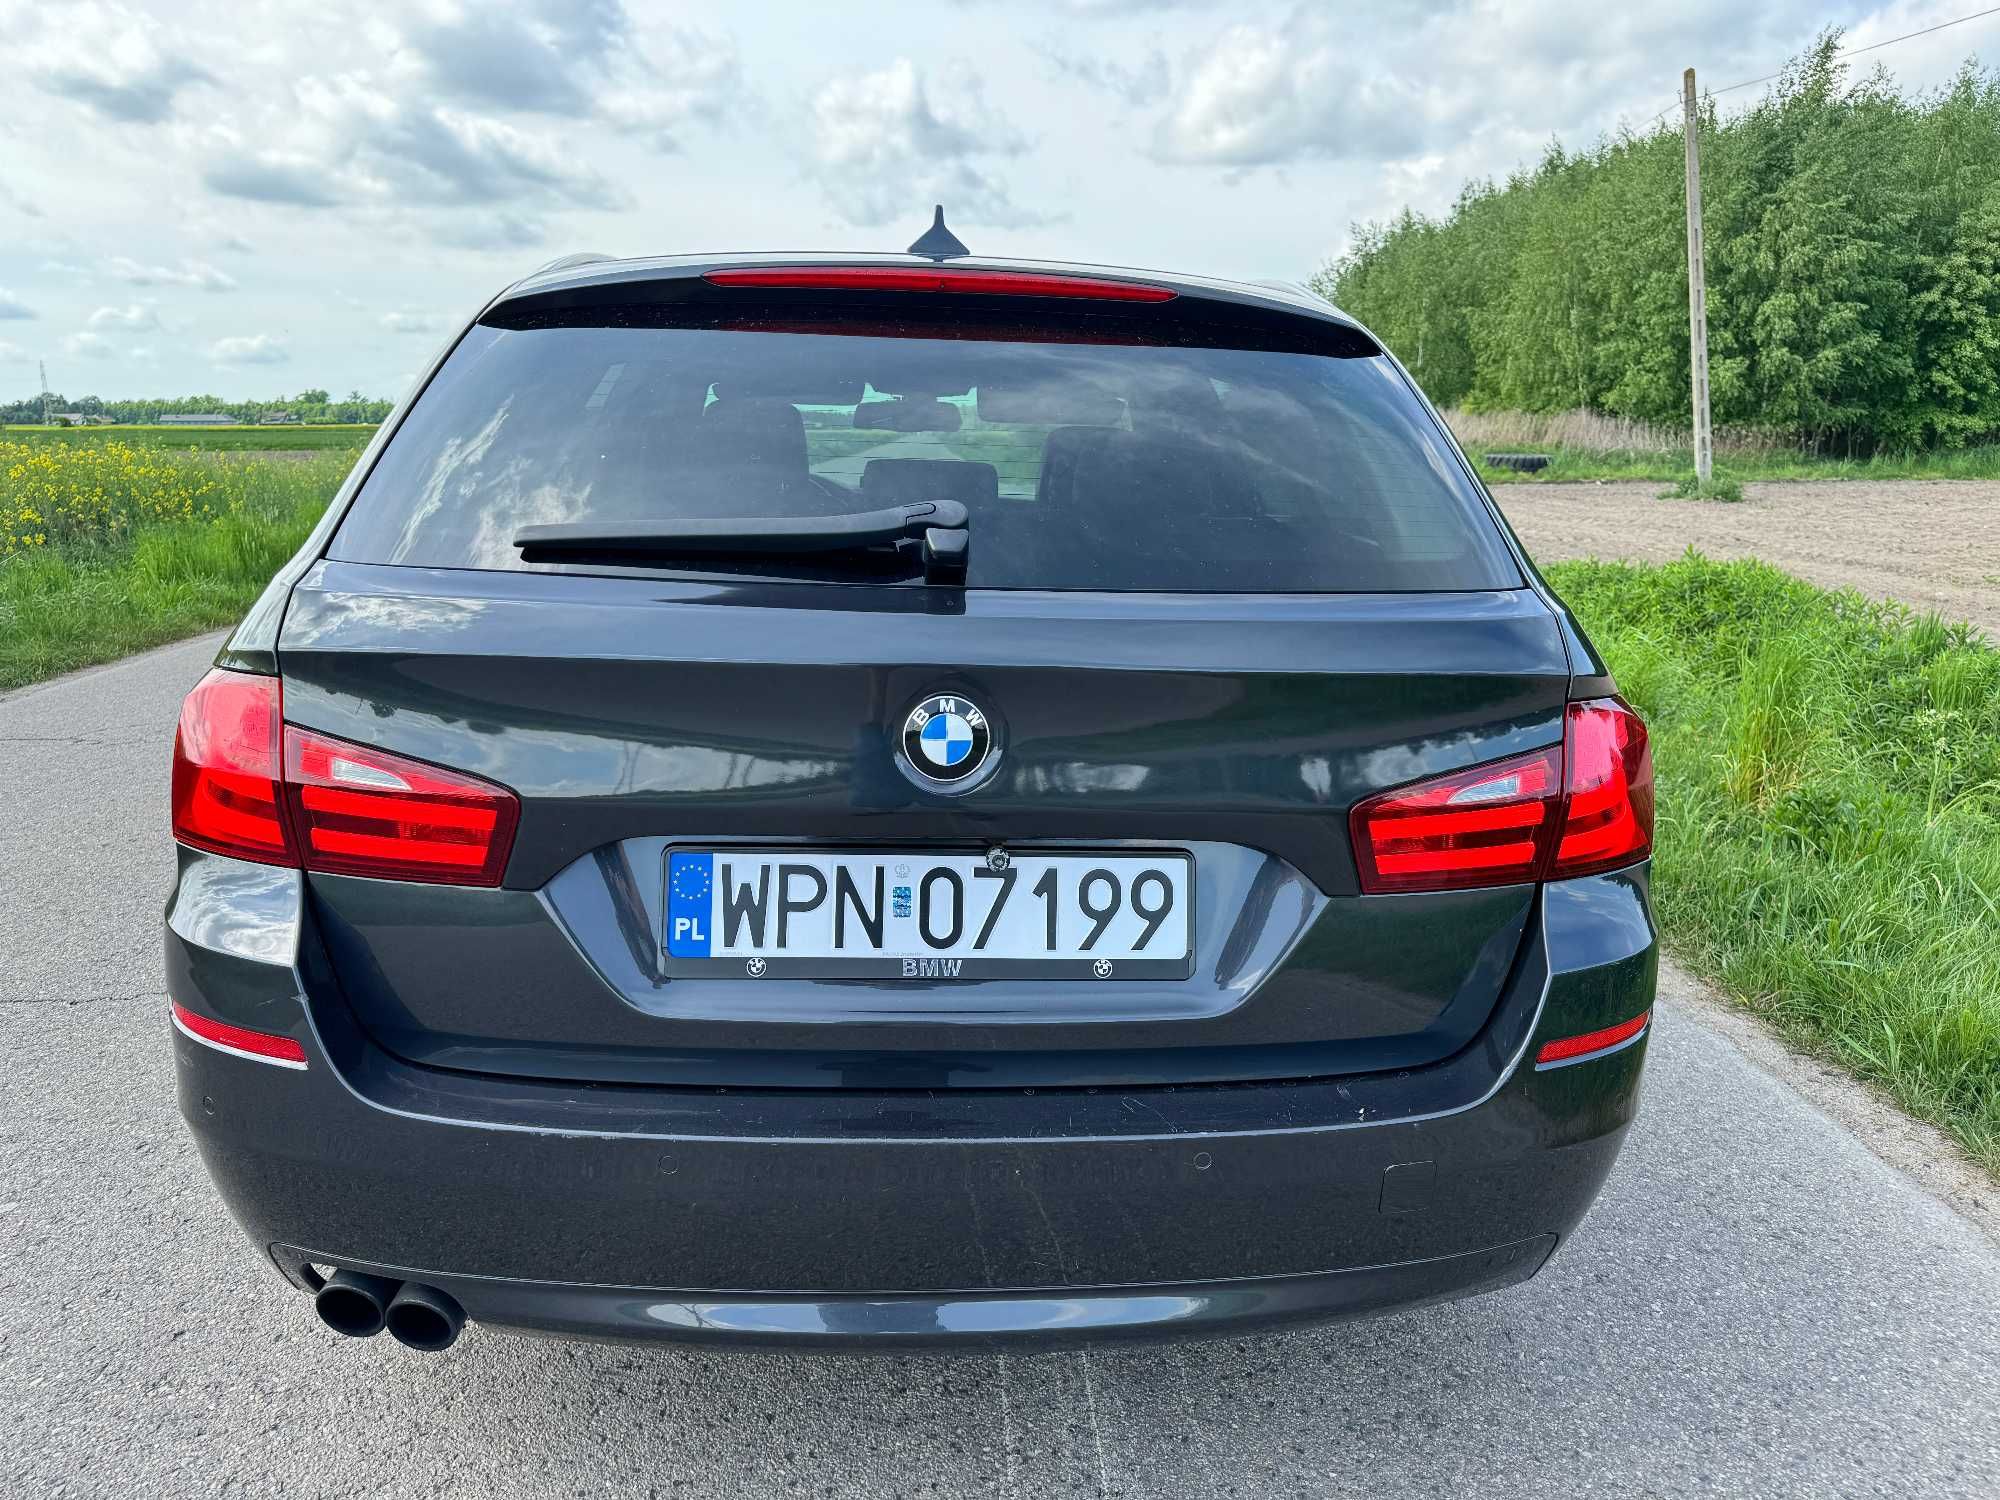 BMW 520d F11 2012 PDC ALU skóra DUŻA NAVI stan BDB bez WKŁADU FV marża